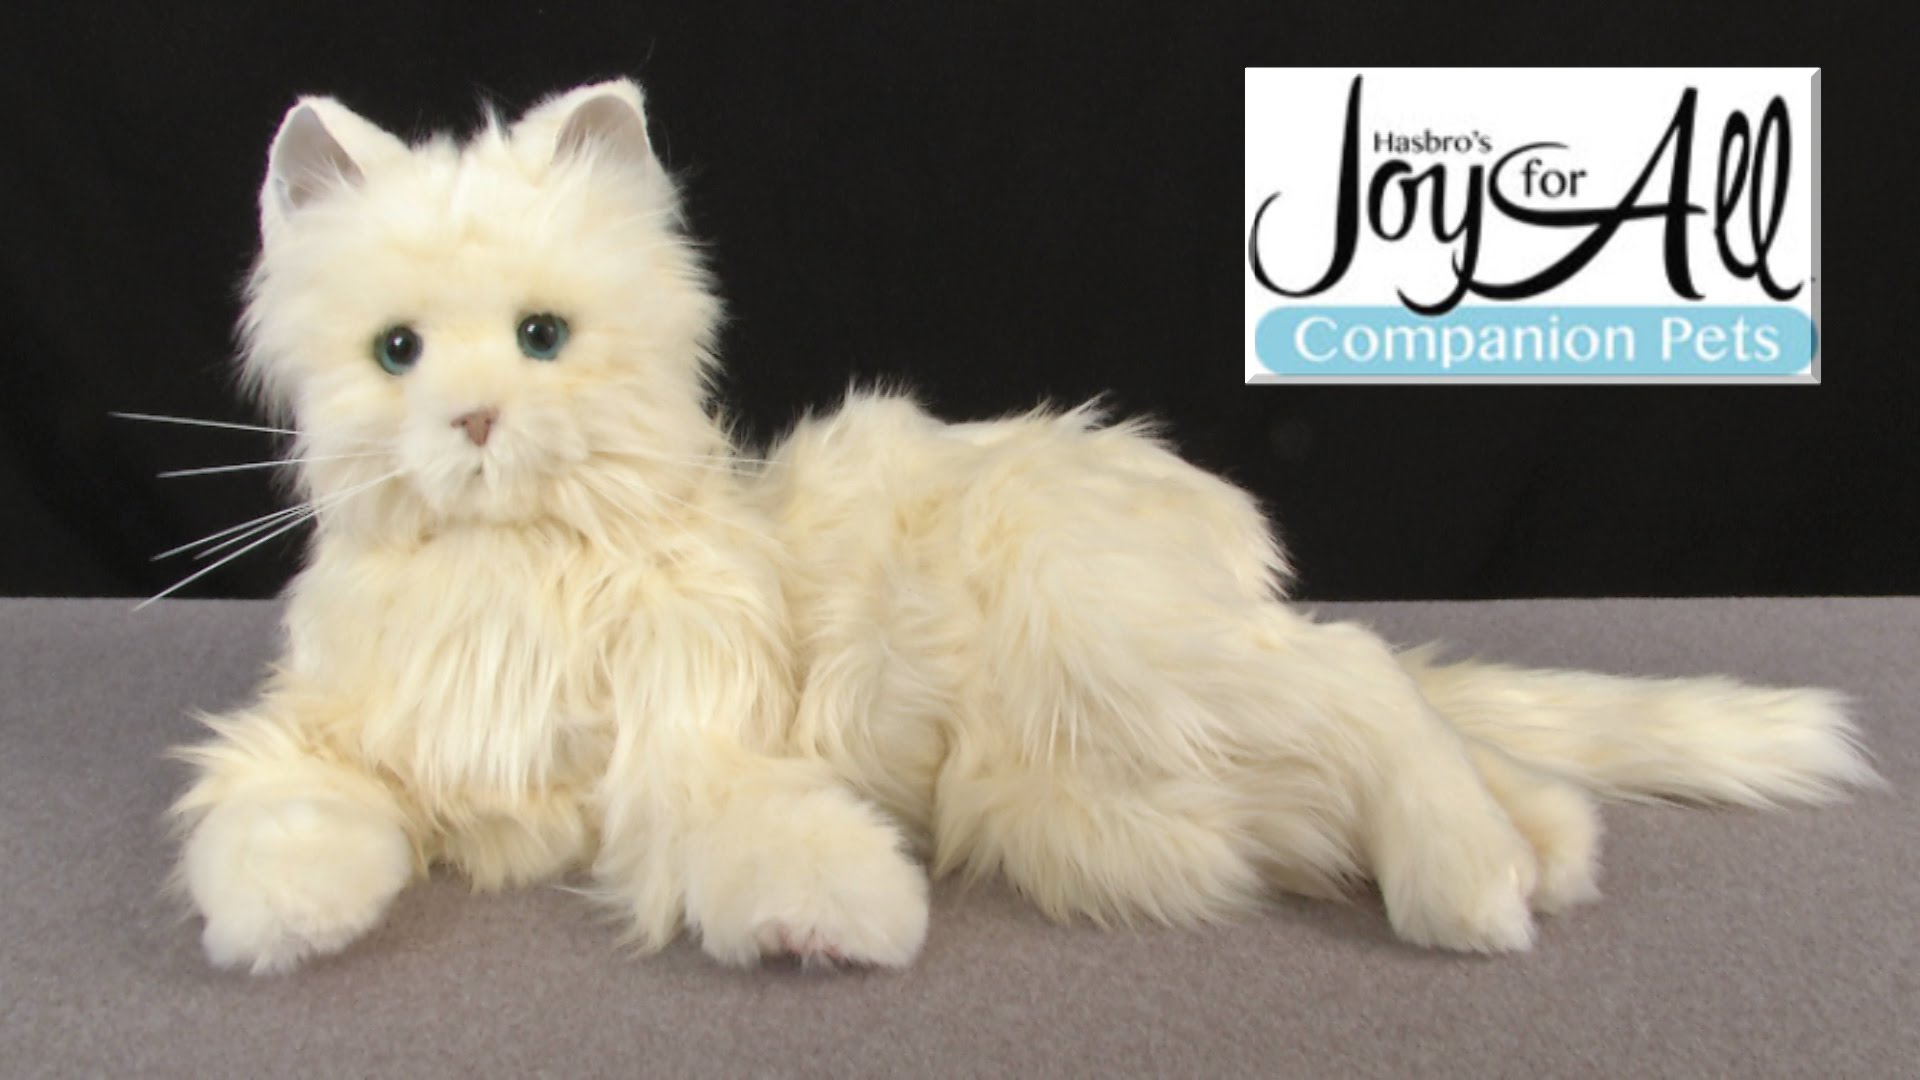 Joy for All Companion Pet Cat from Hasbro - YouTube